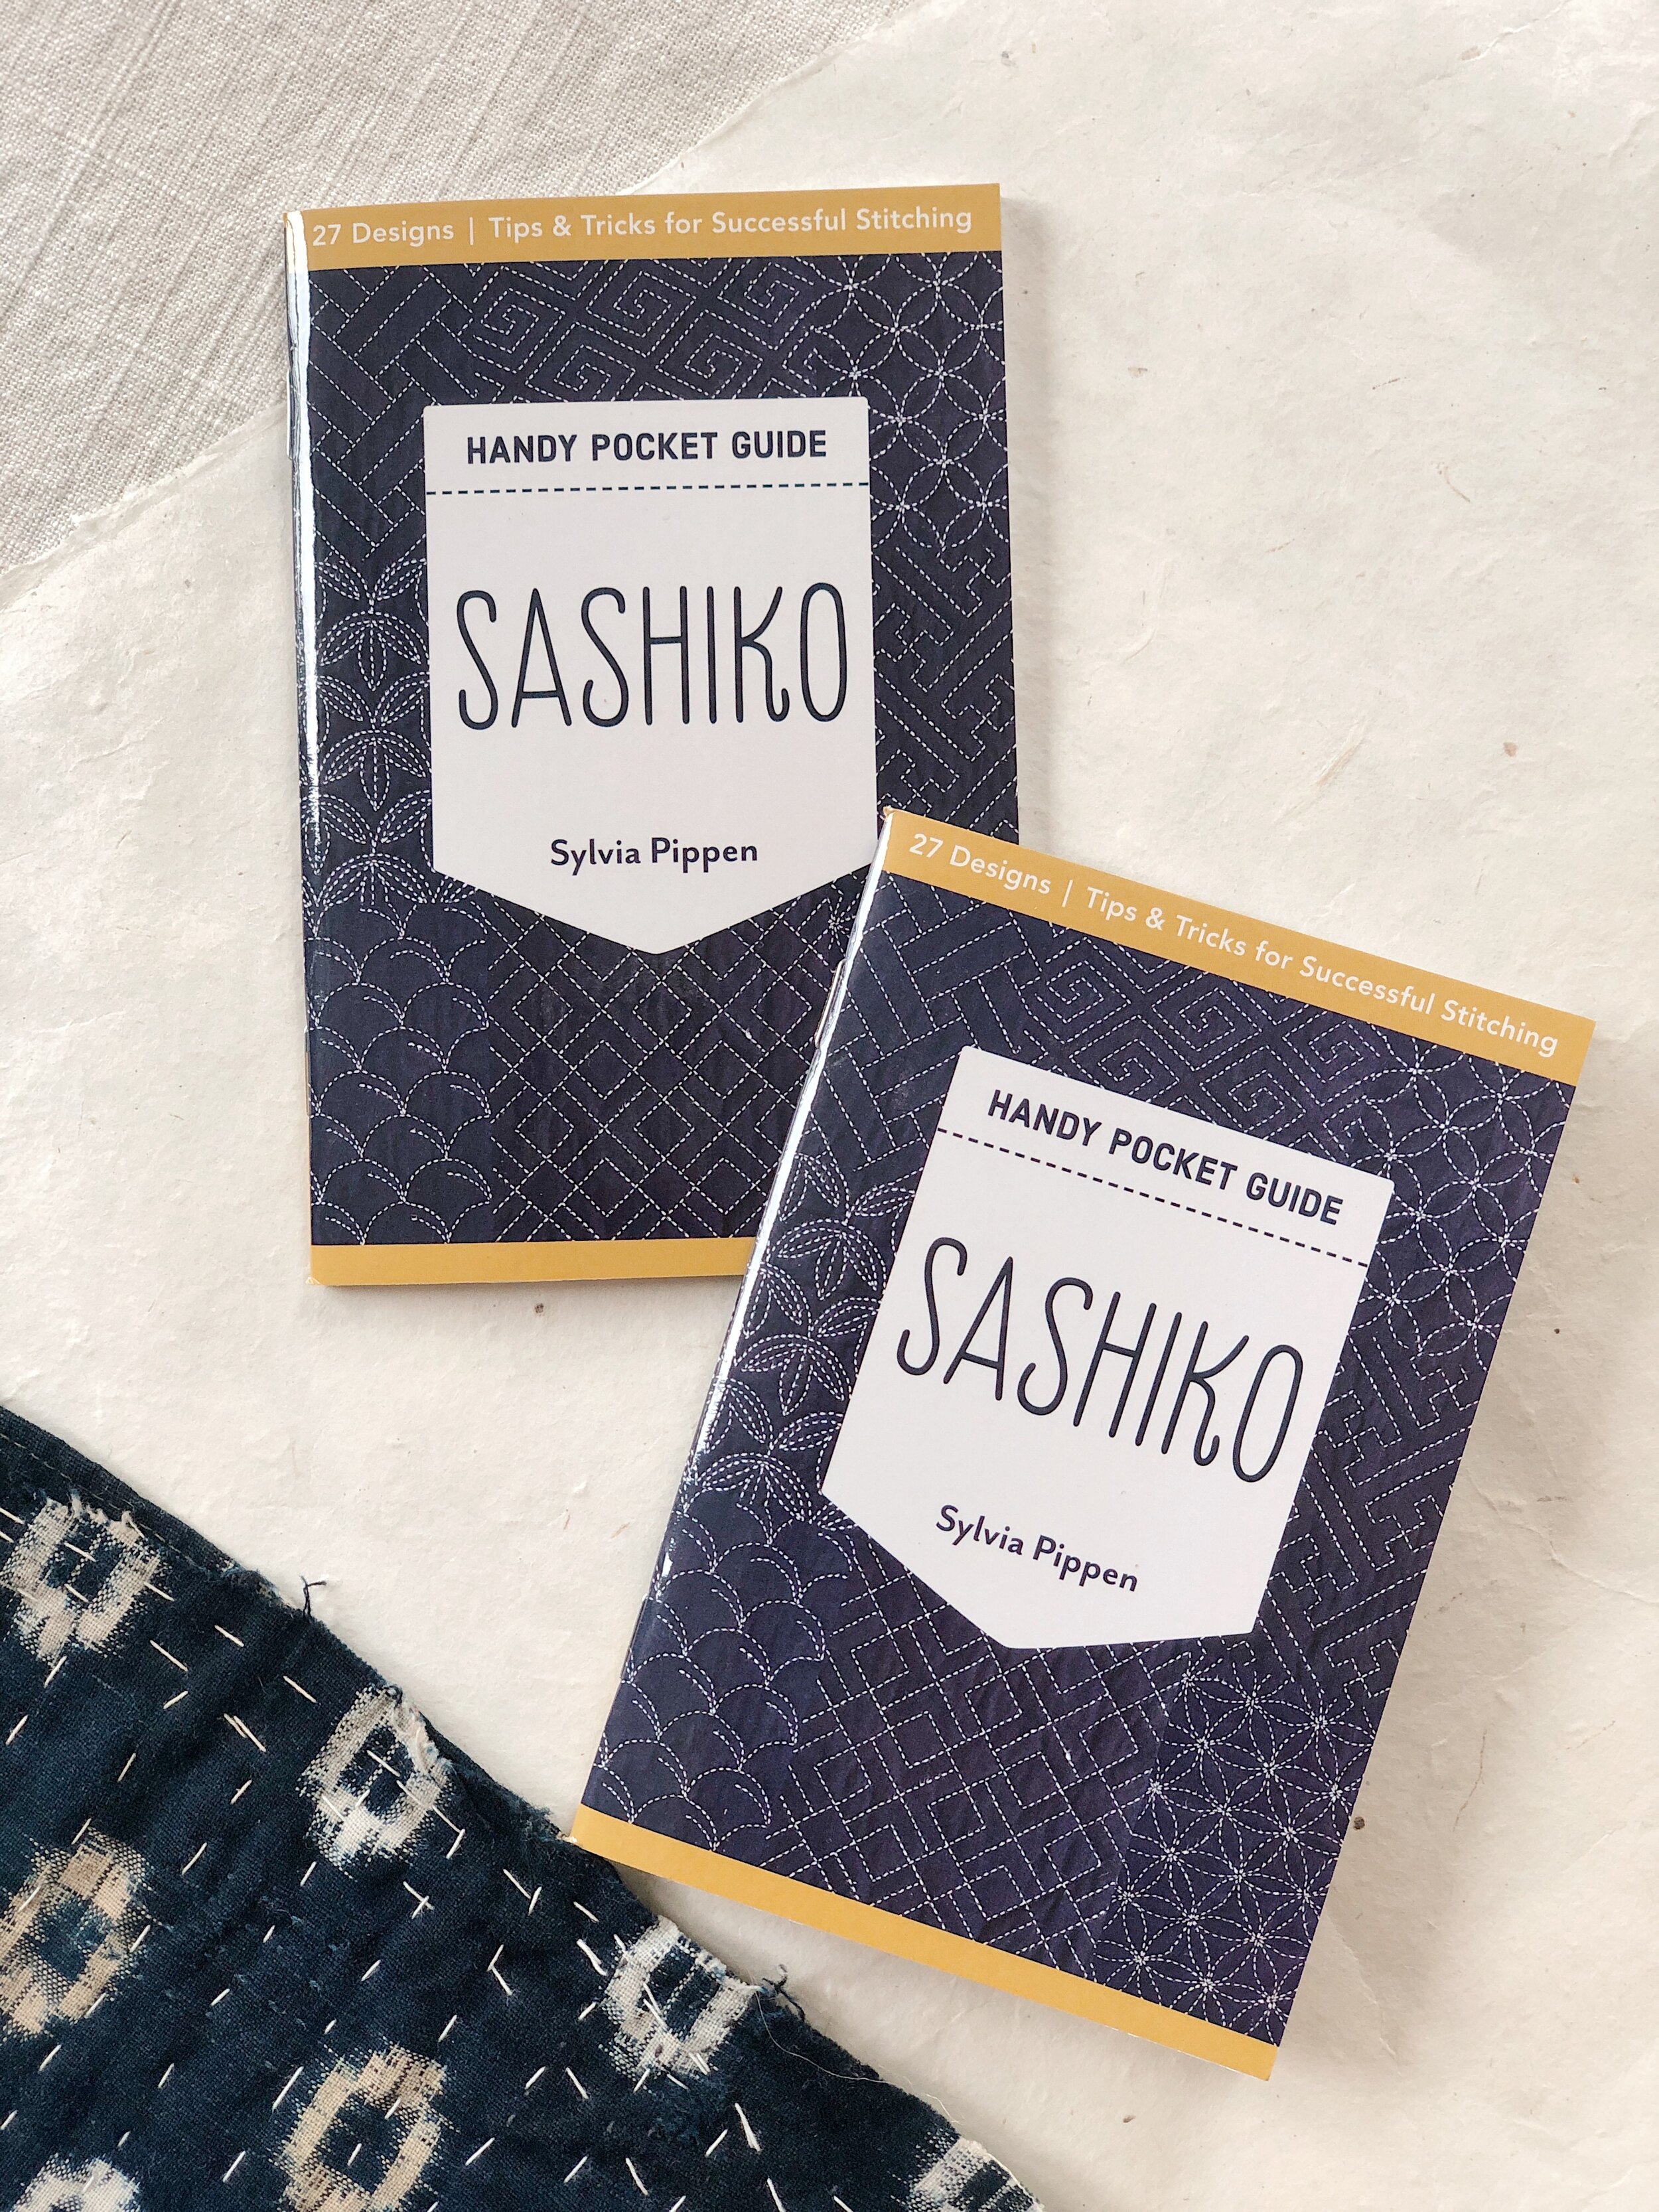 Sashiko Basics